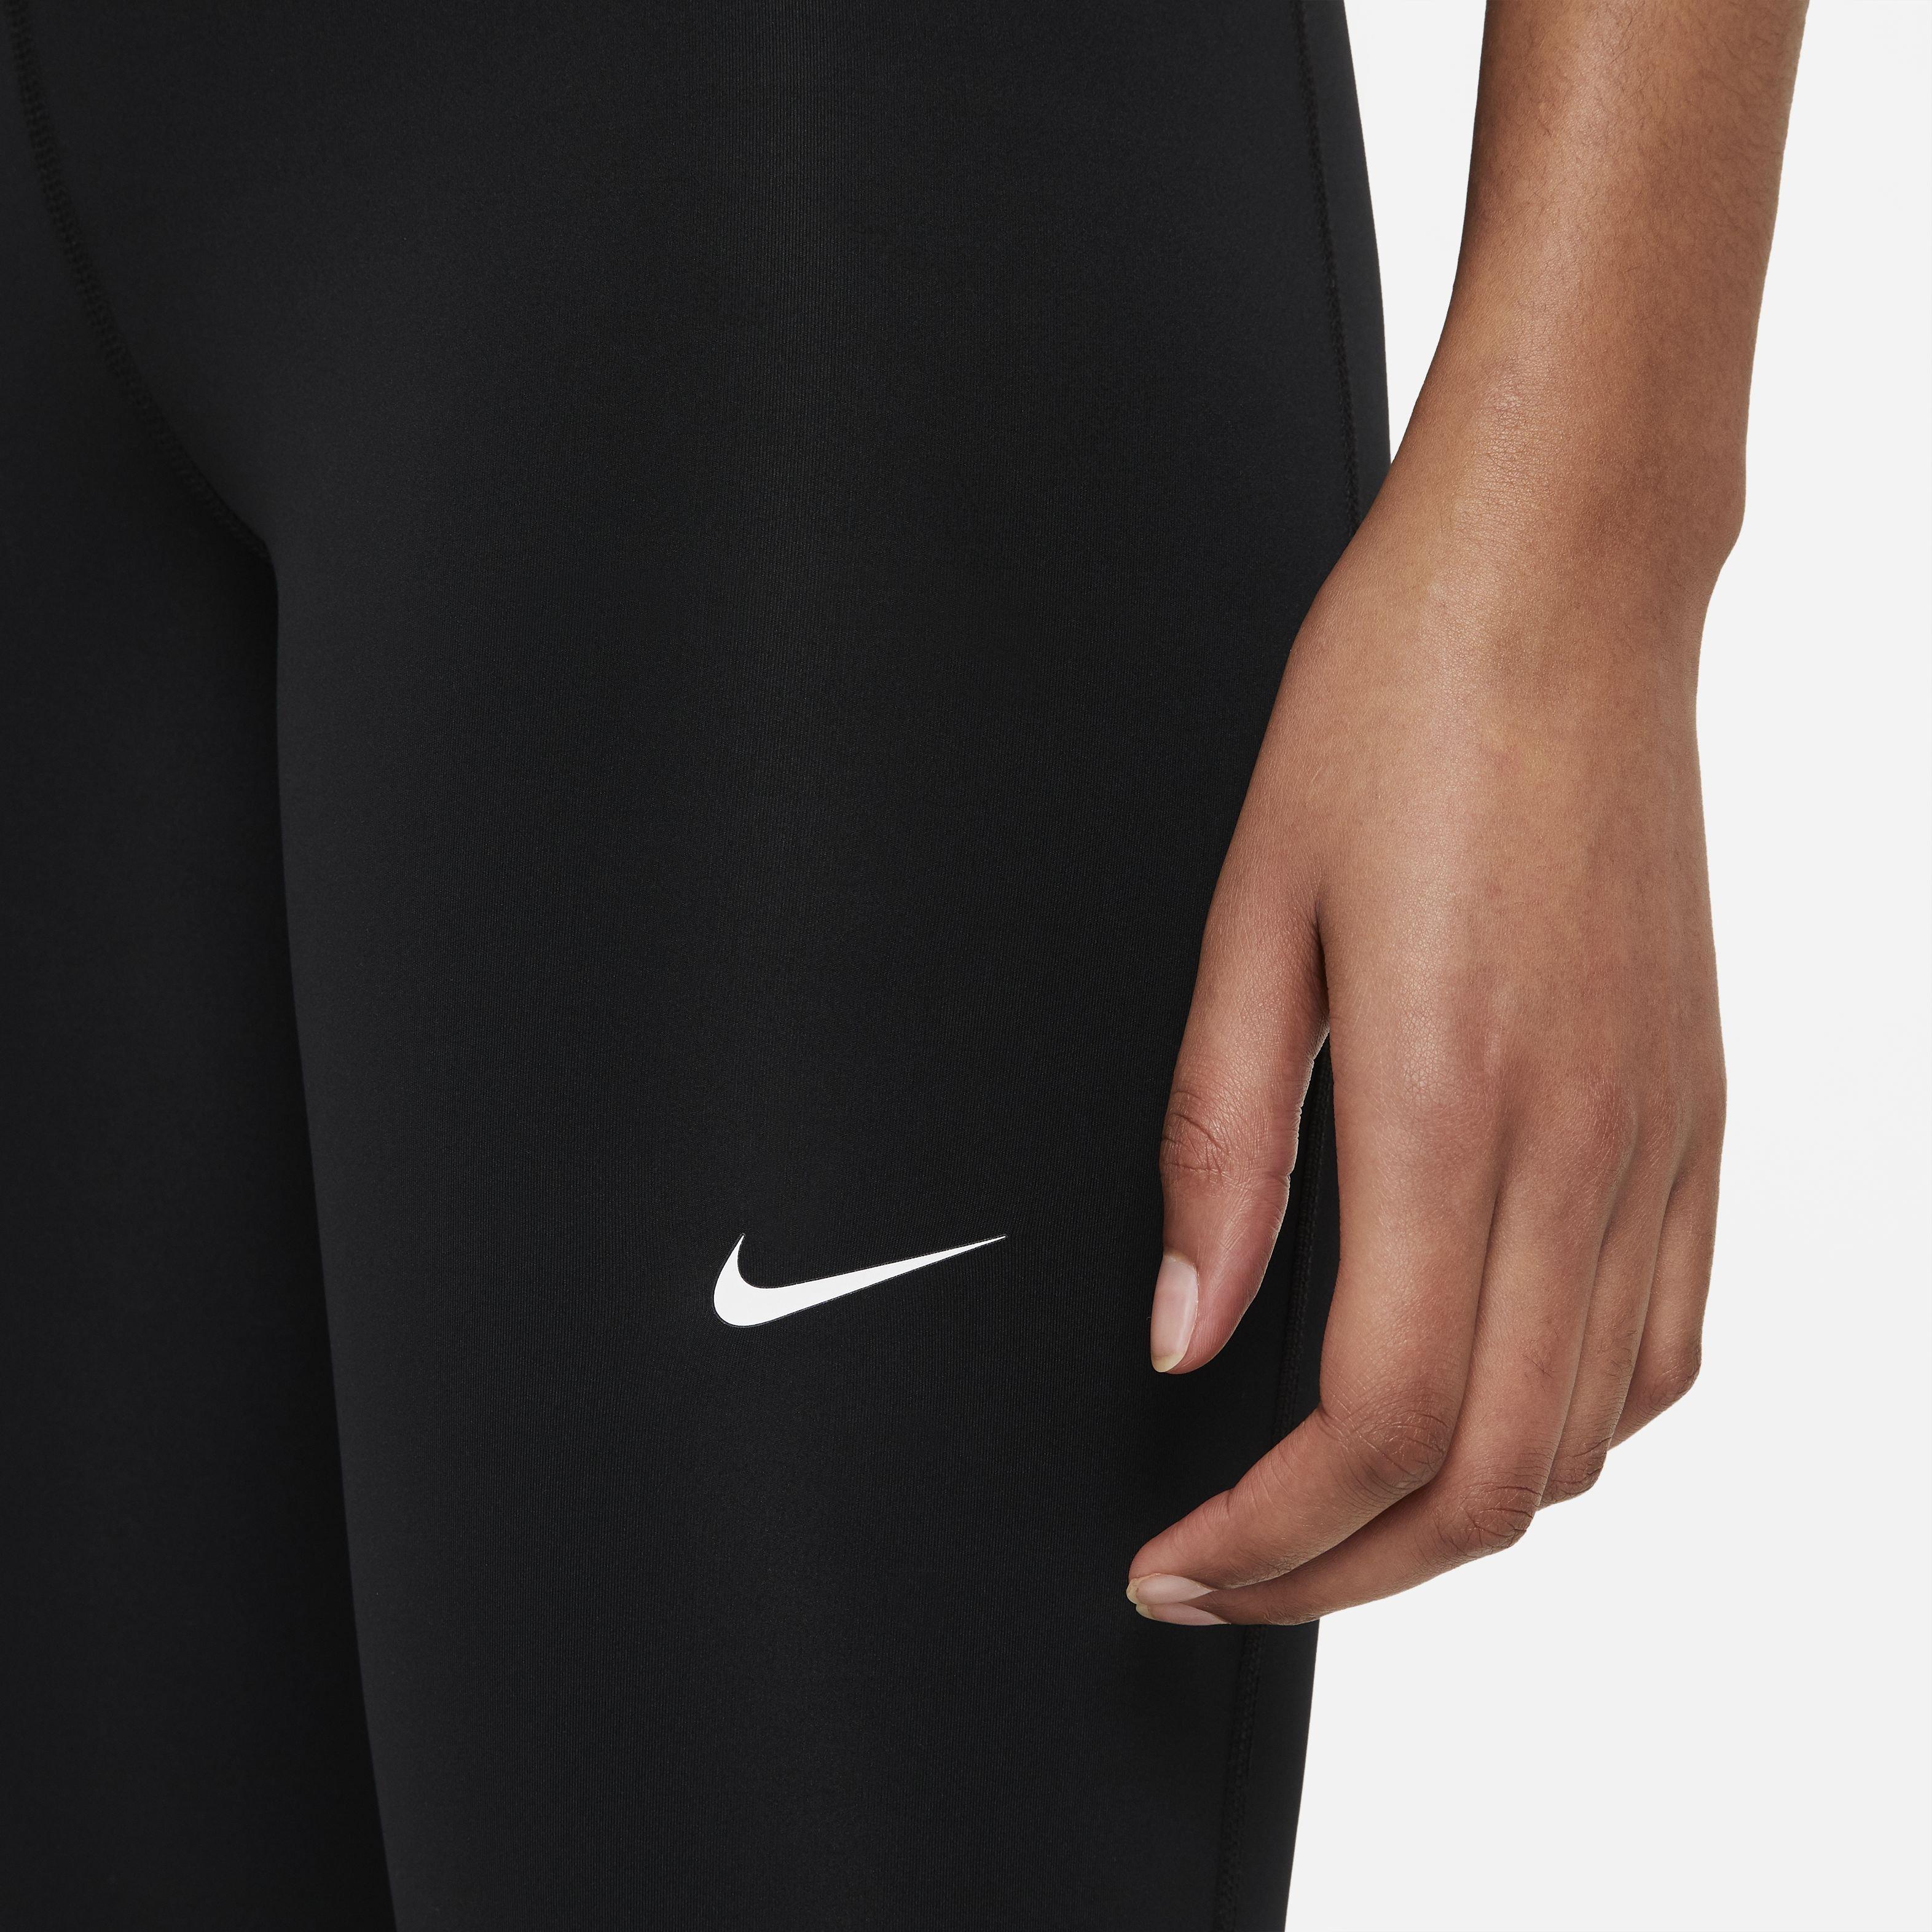 Nike Pro Training 365 high waisted 7/8 leggings in gray